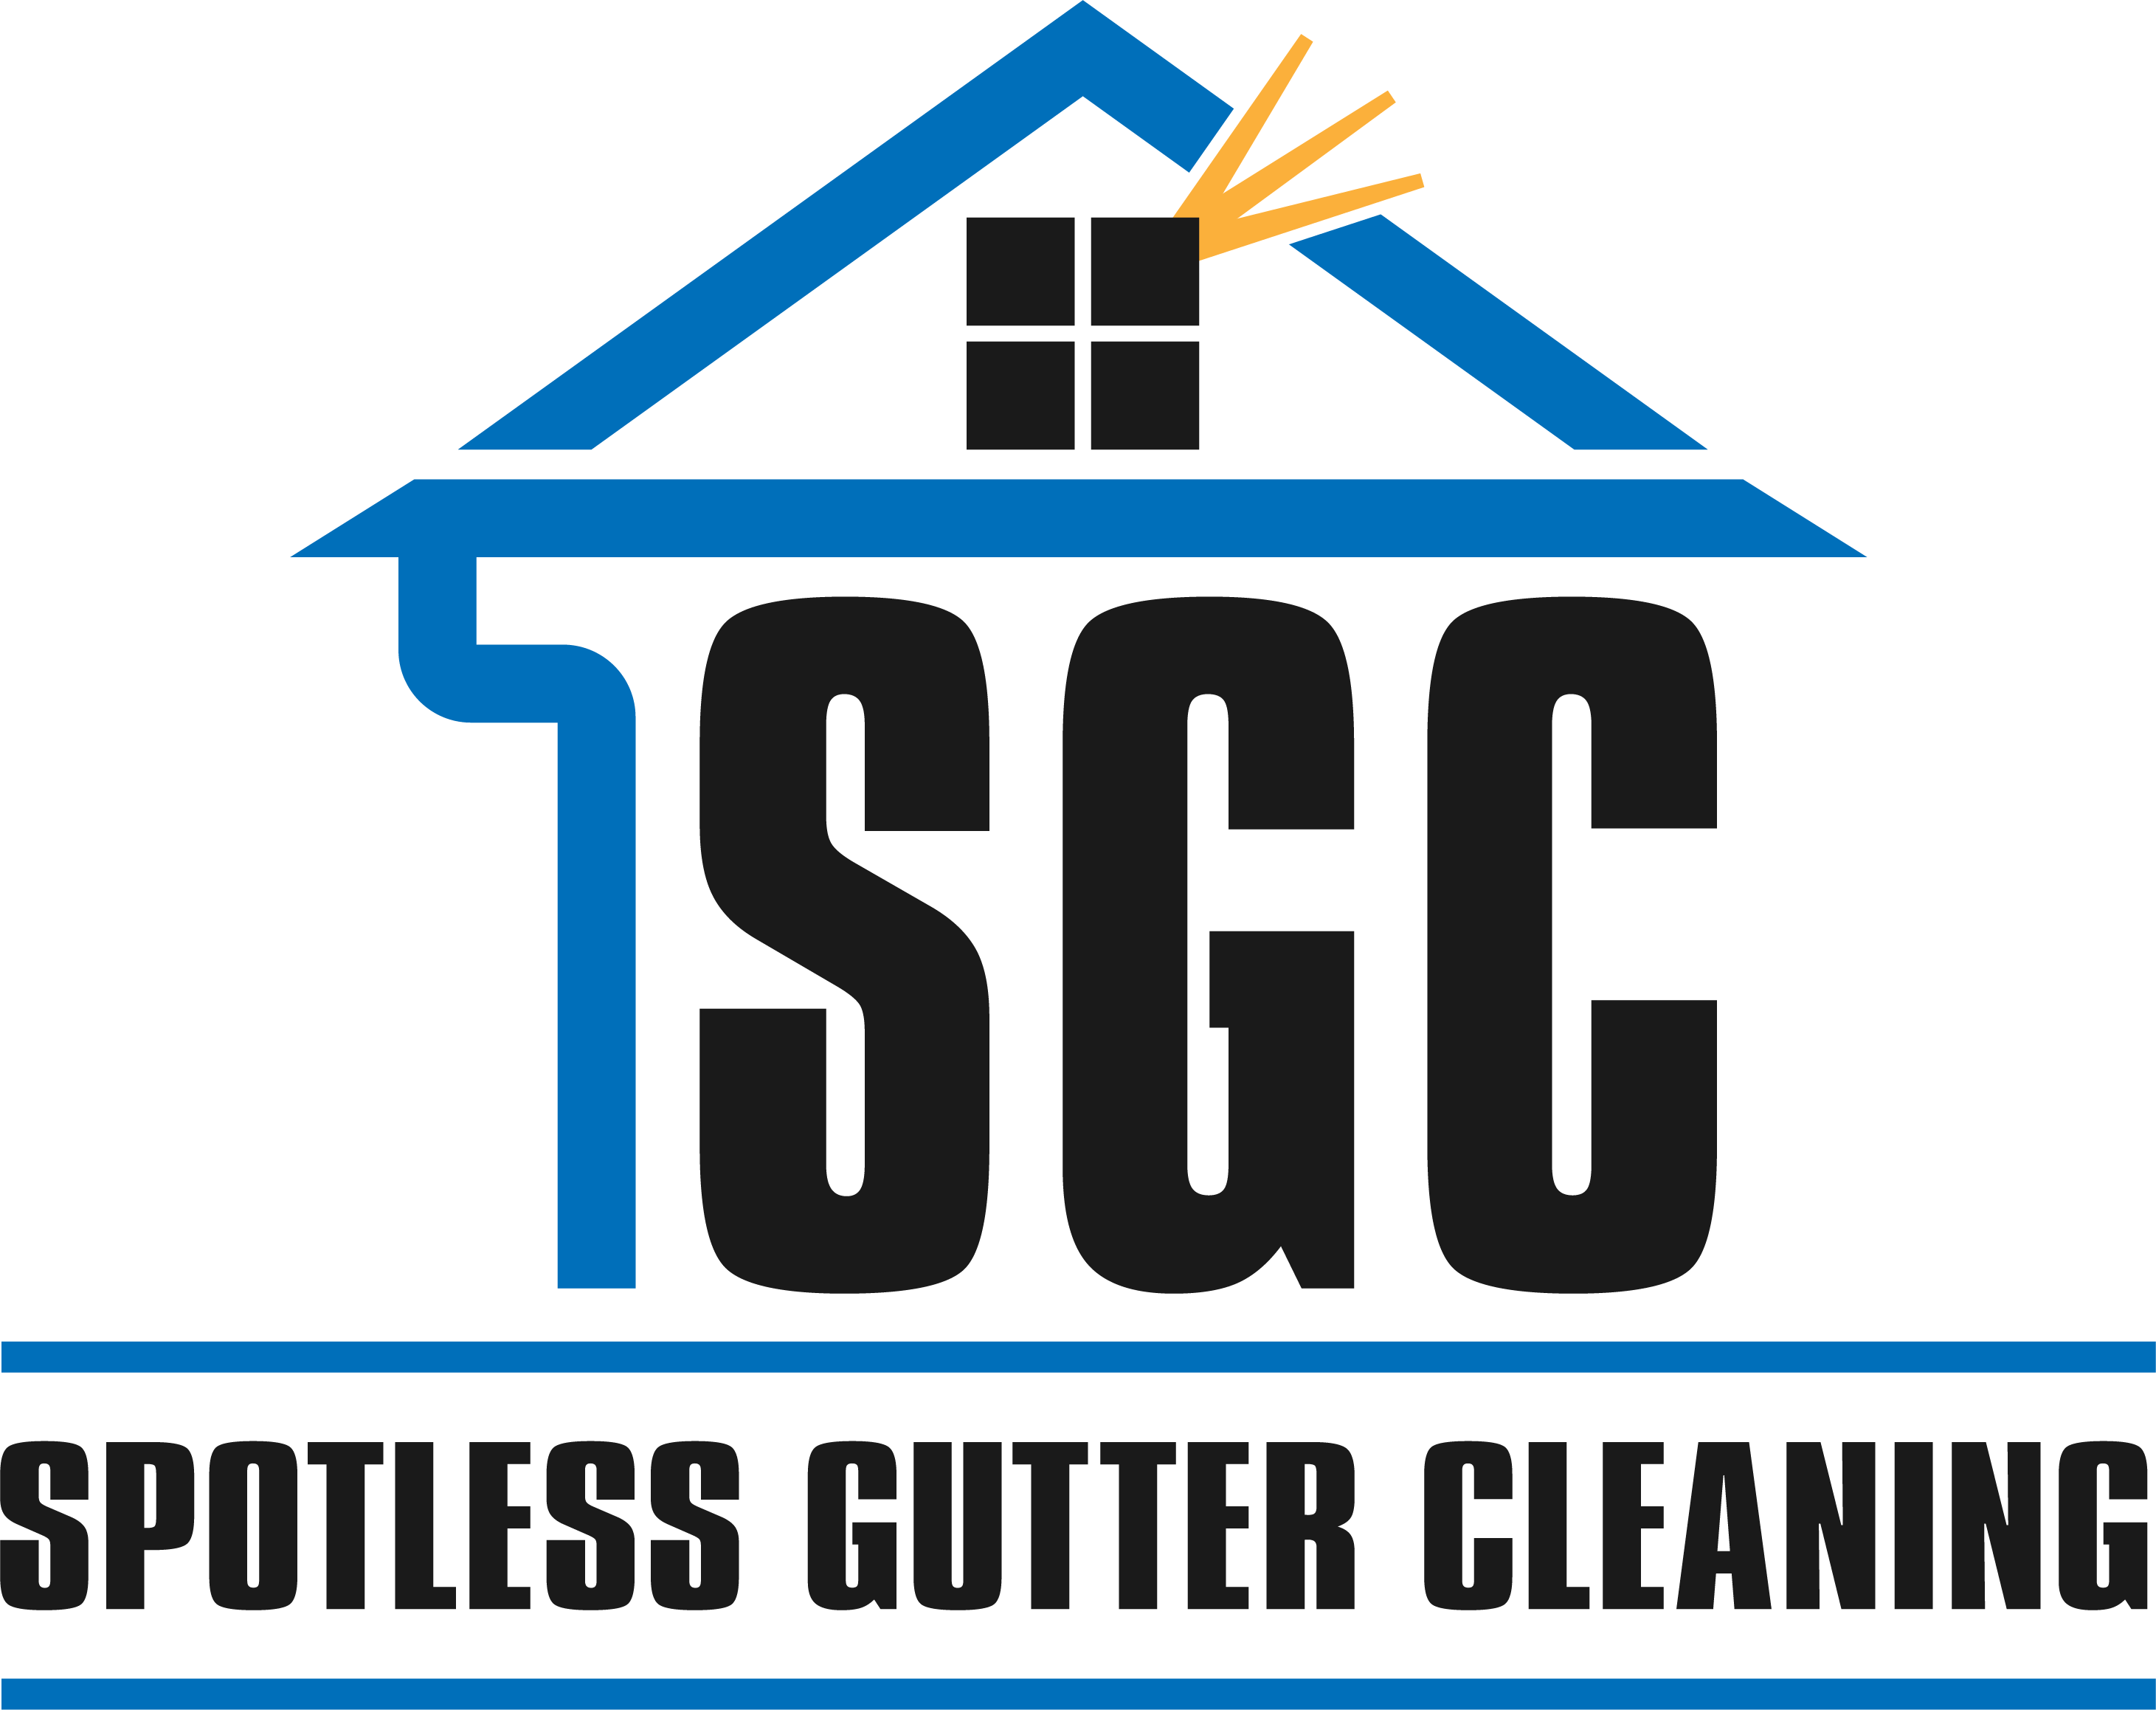 Spotless Gutter Cleaning Logo